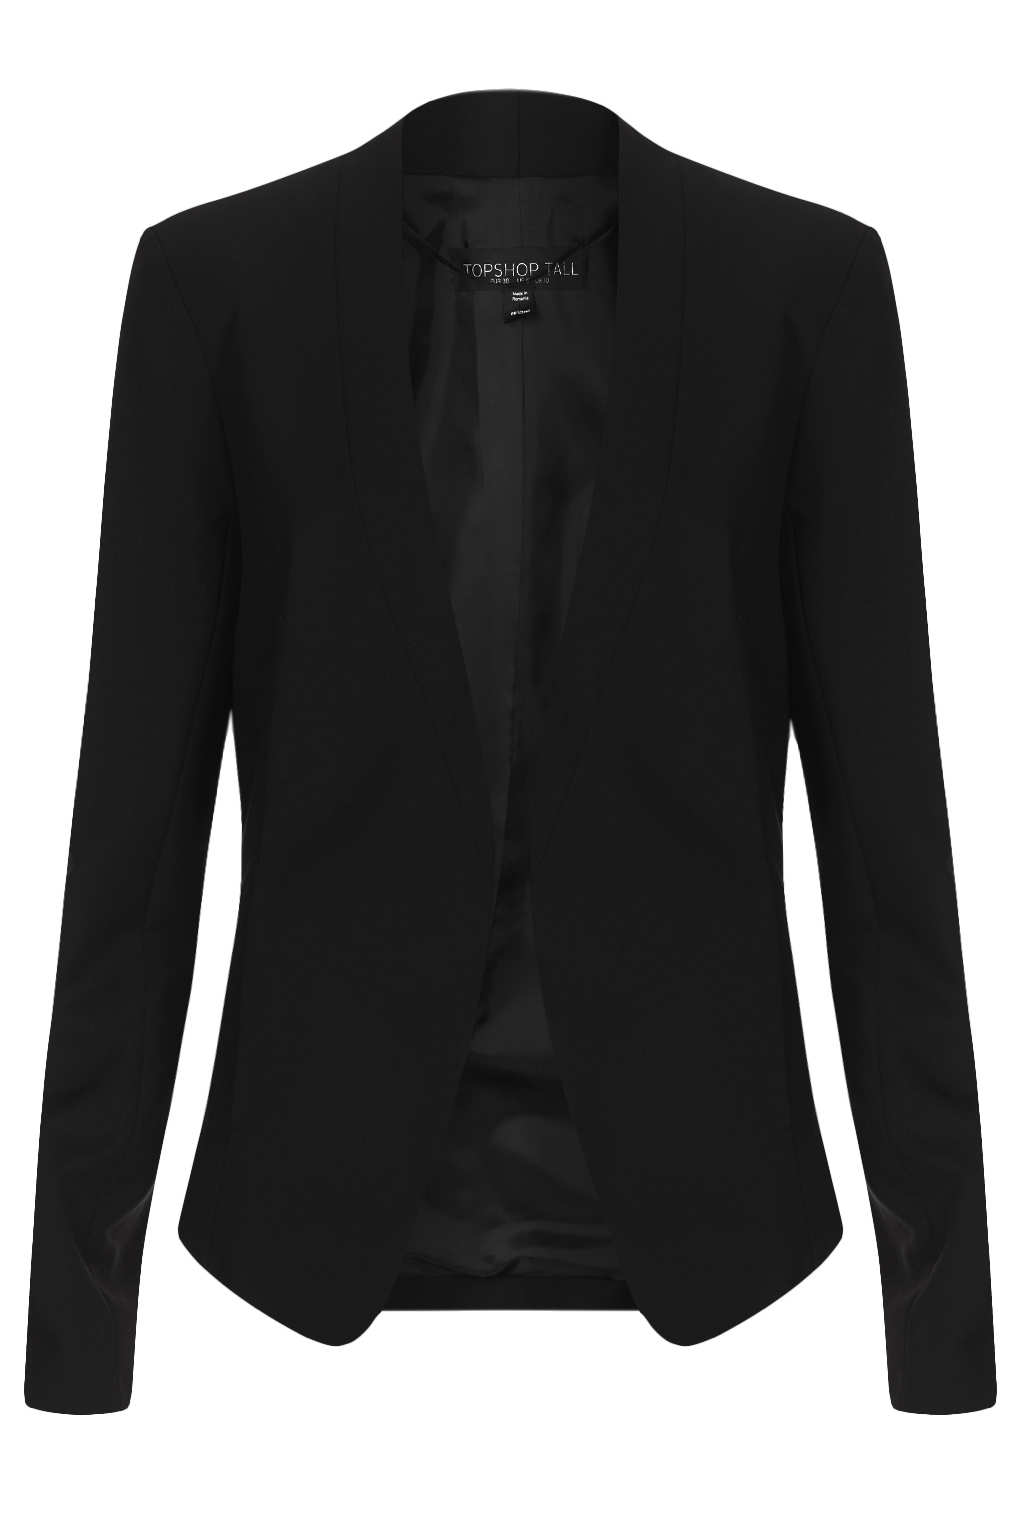 Lyst - Topshop Tall Tailored Blazer Jacket in Black